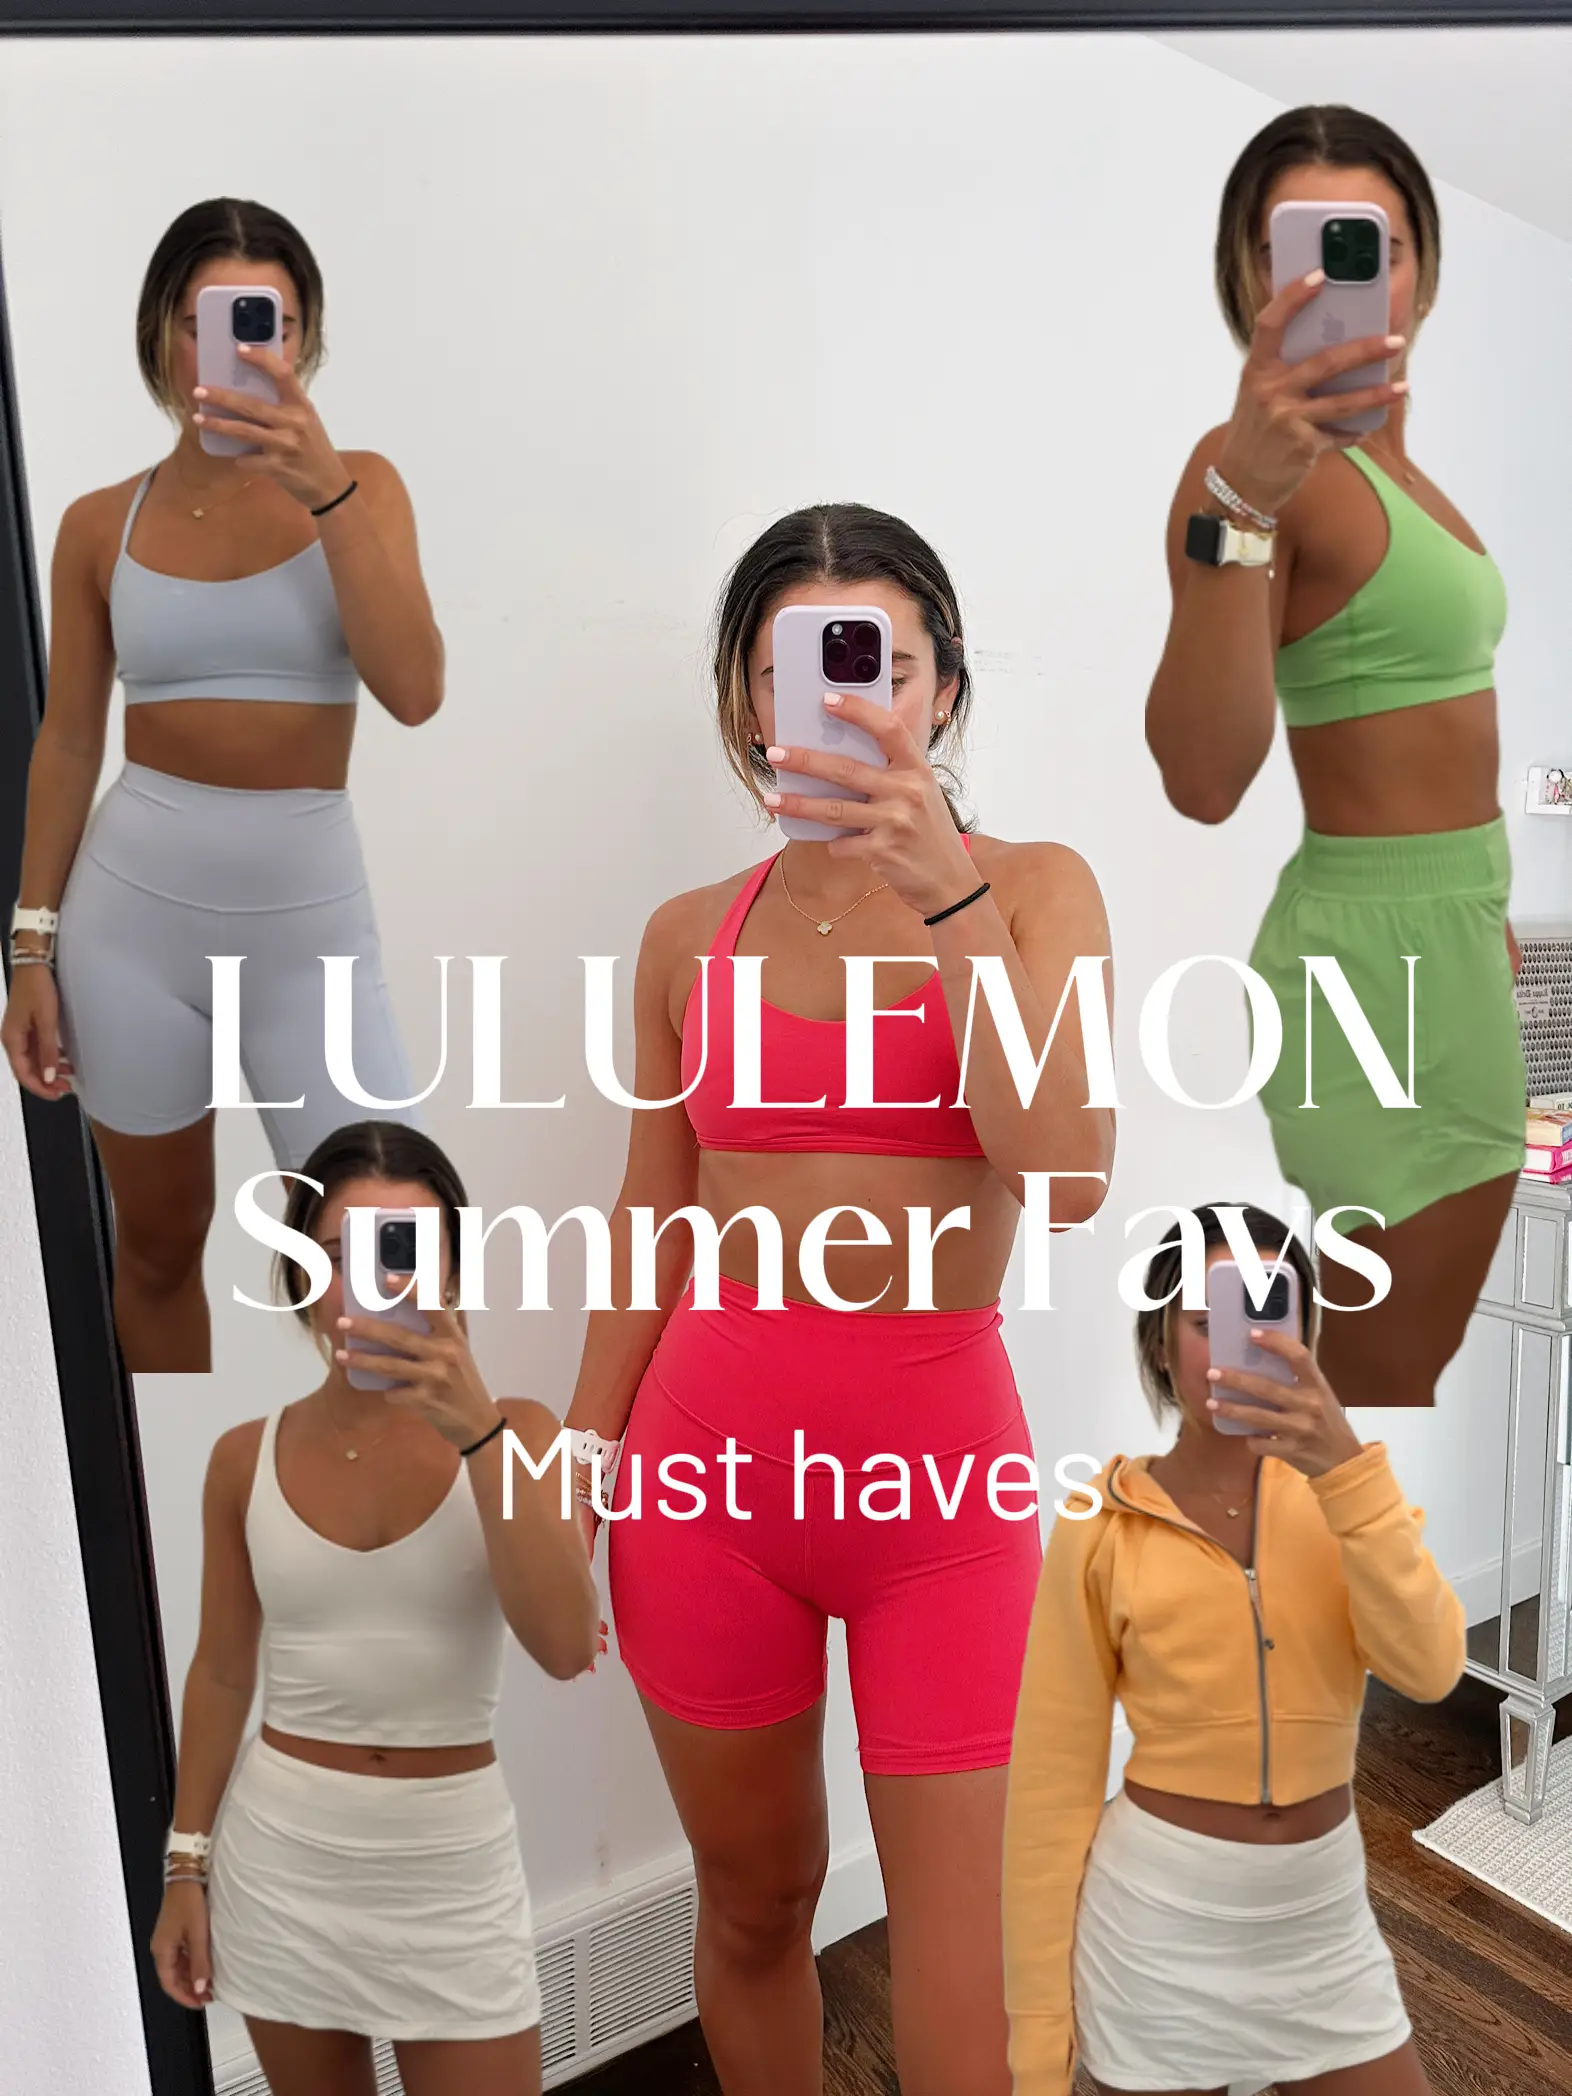 Lululemon Summer FAVS! 🥰🛍️, Gallery posted by Elizabeth